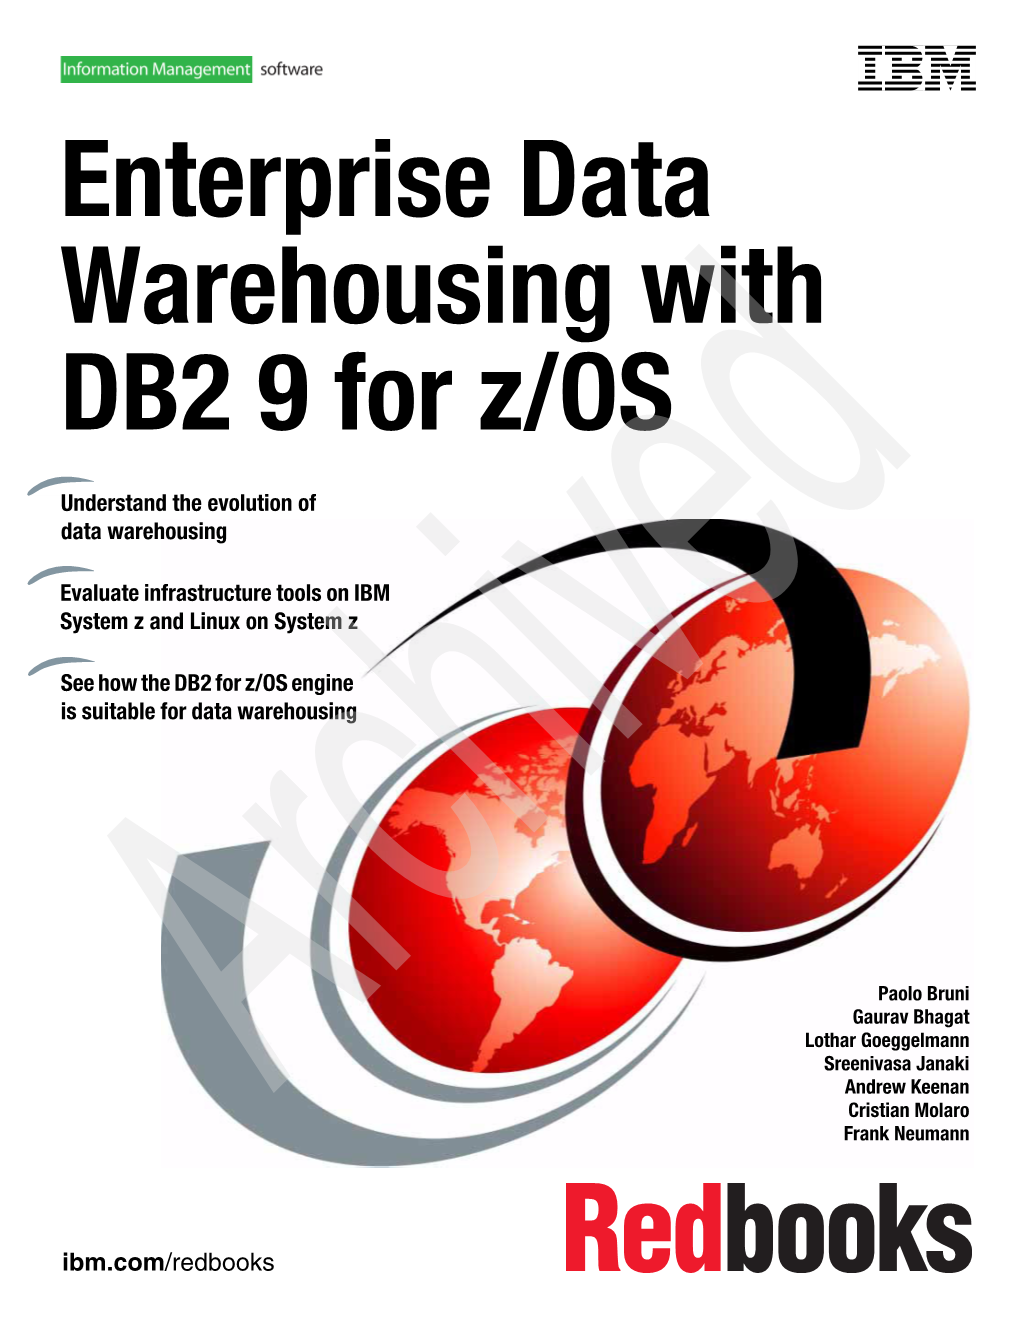 Enterprise Data Warehousing with DB2 9 for Z/OS